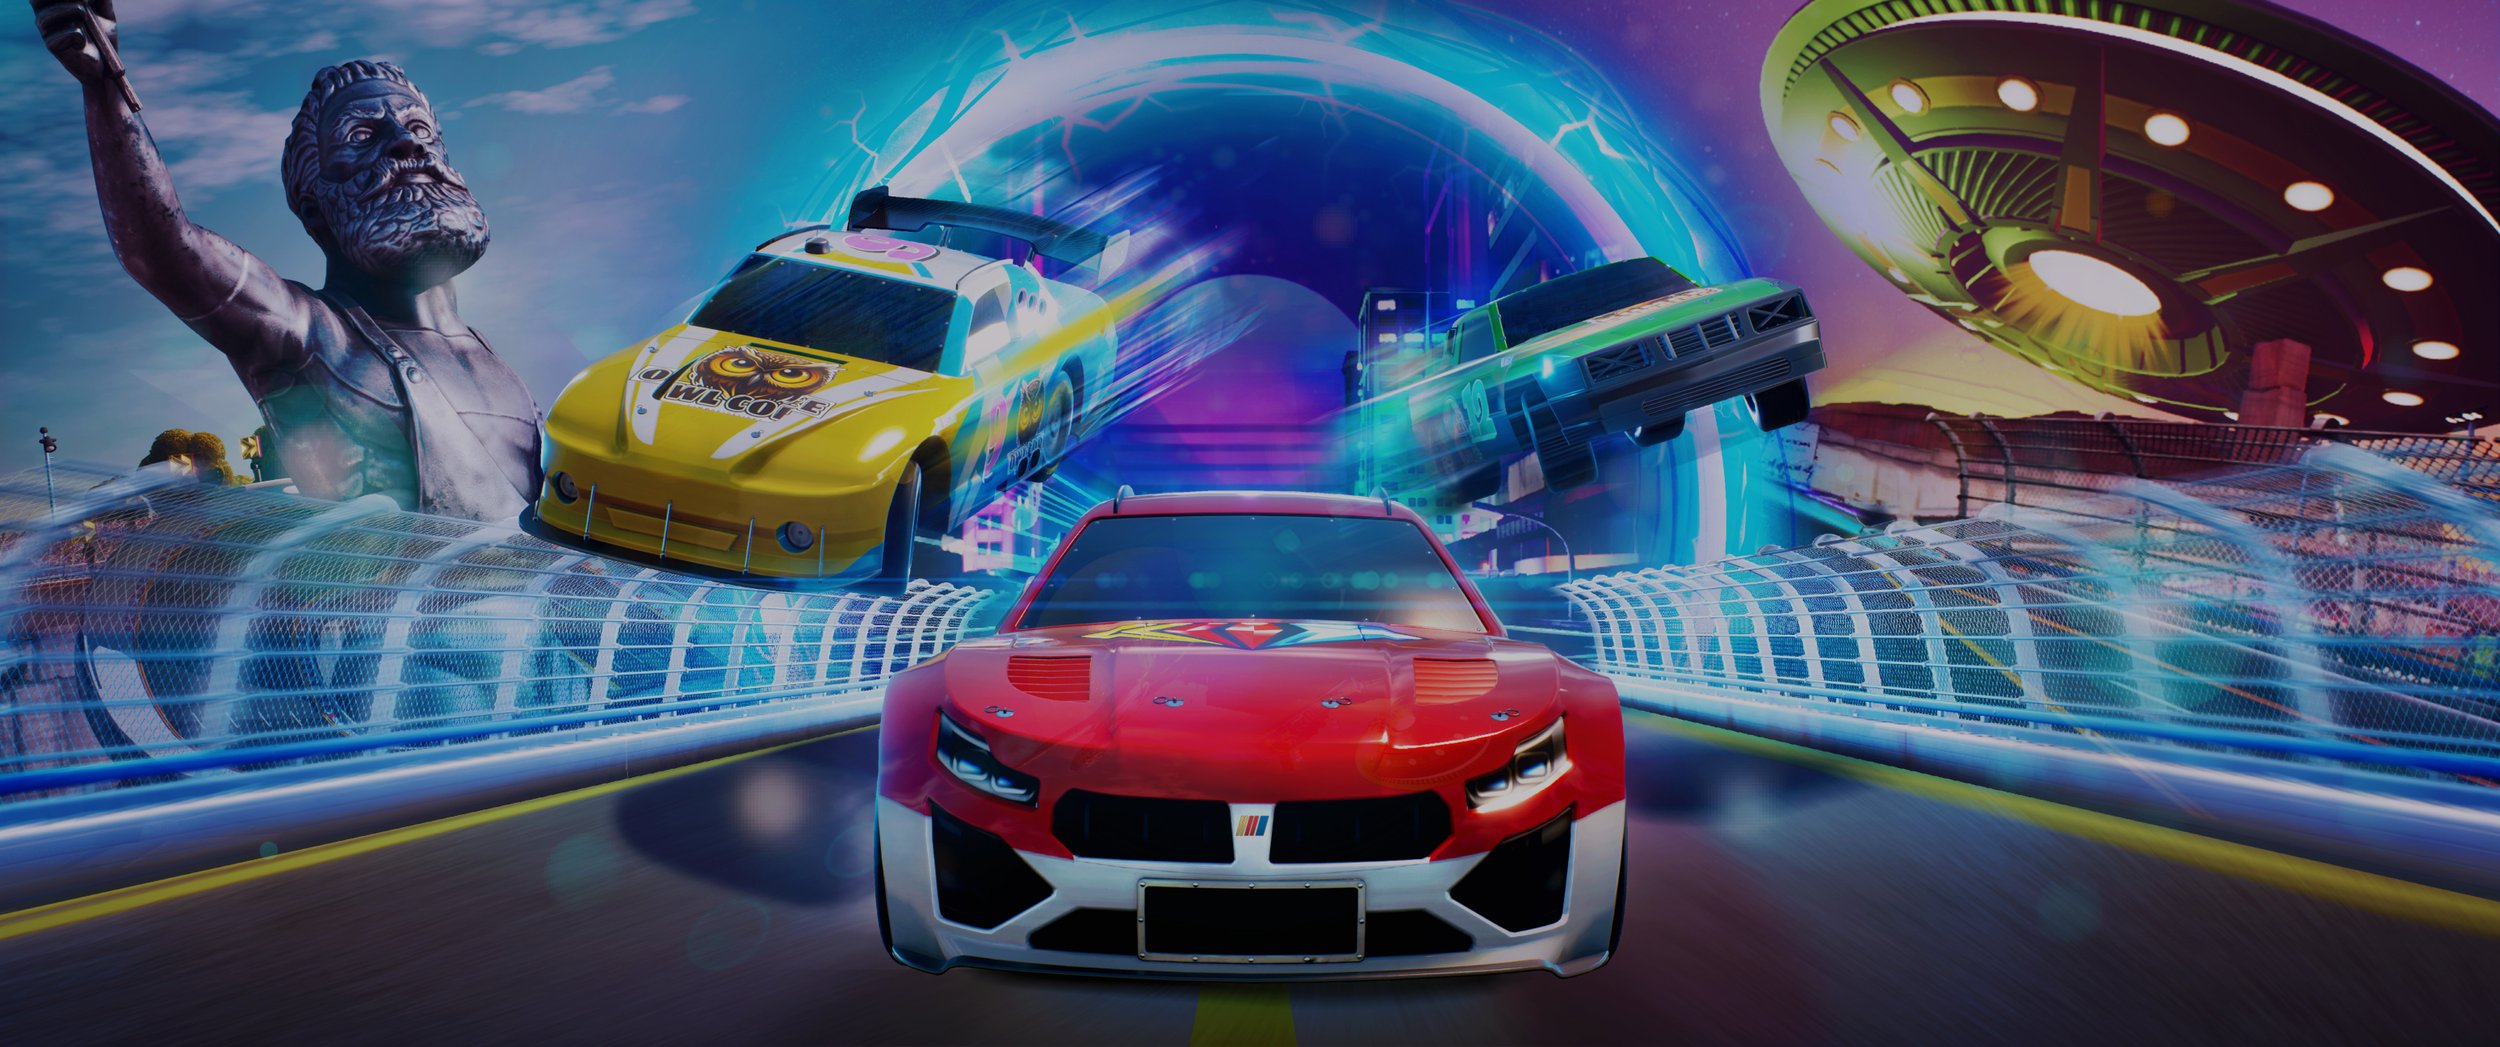 Dreamworks All-Star Kart Racing - Review — Analog Stick Gaming